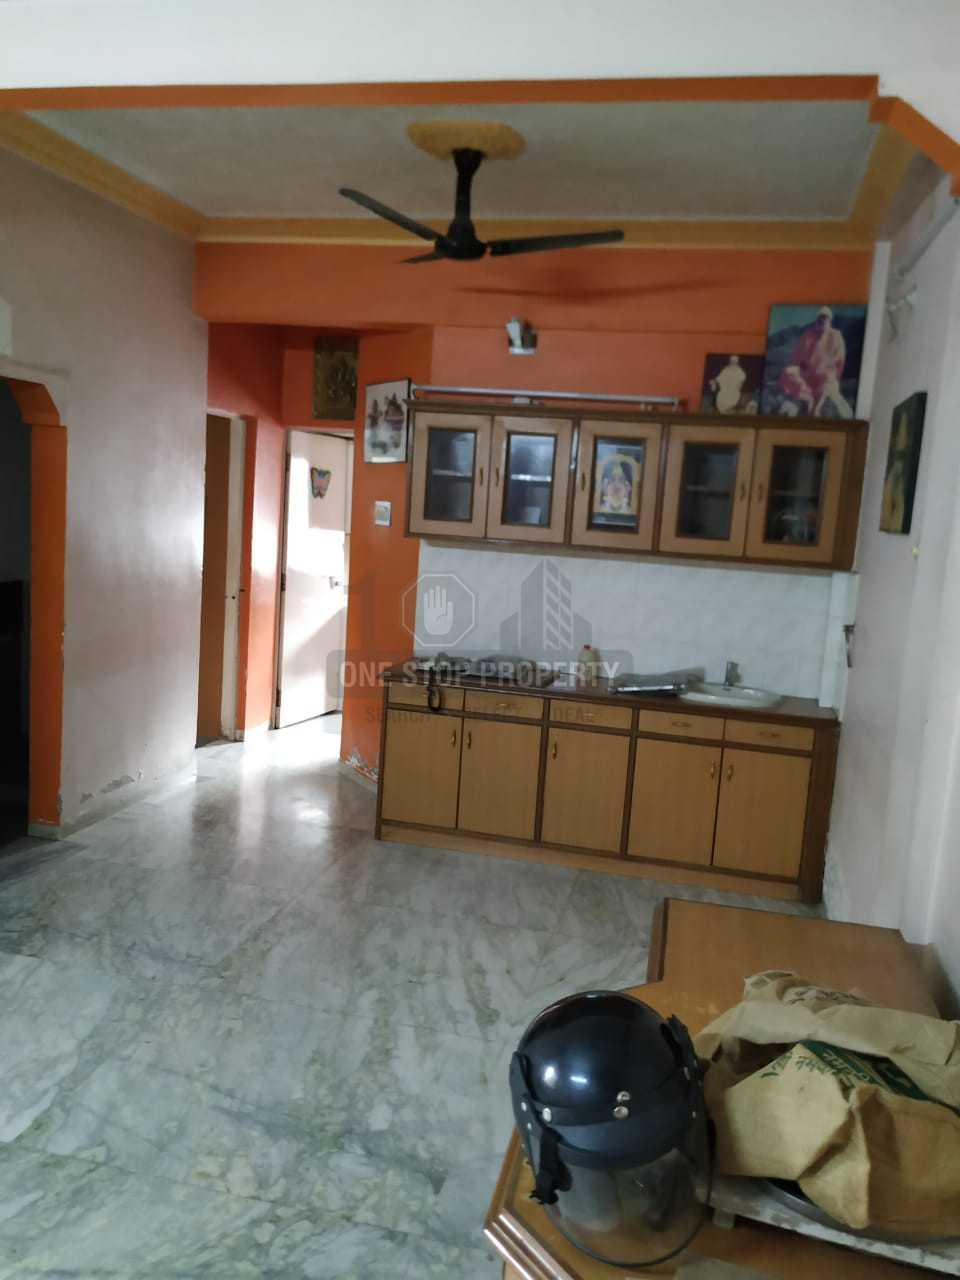 Saundarya Nihar Apartment